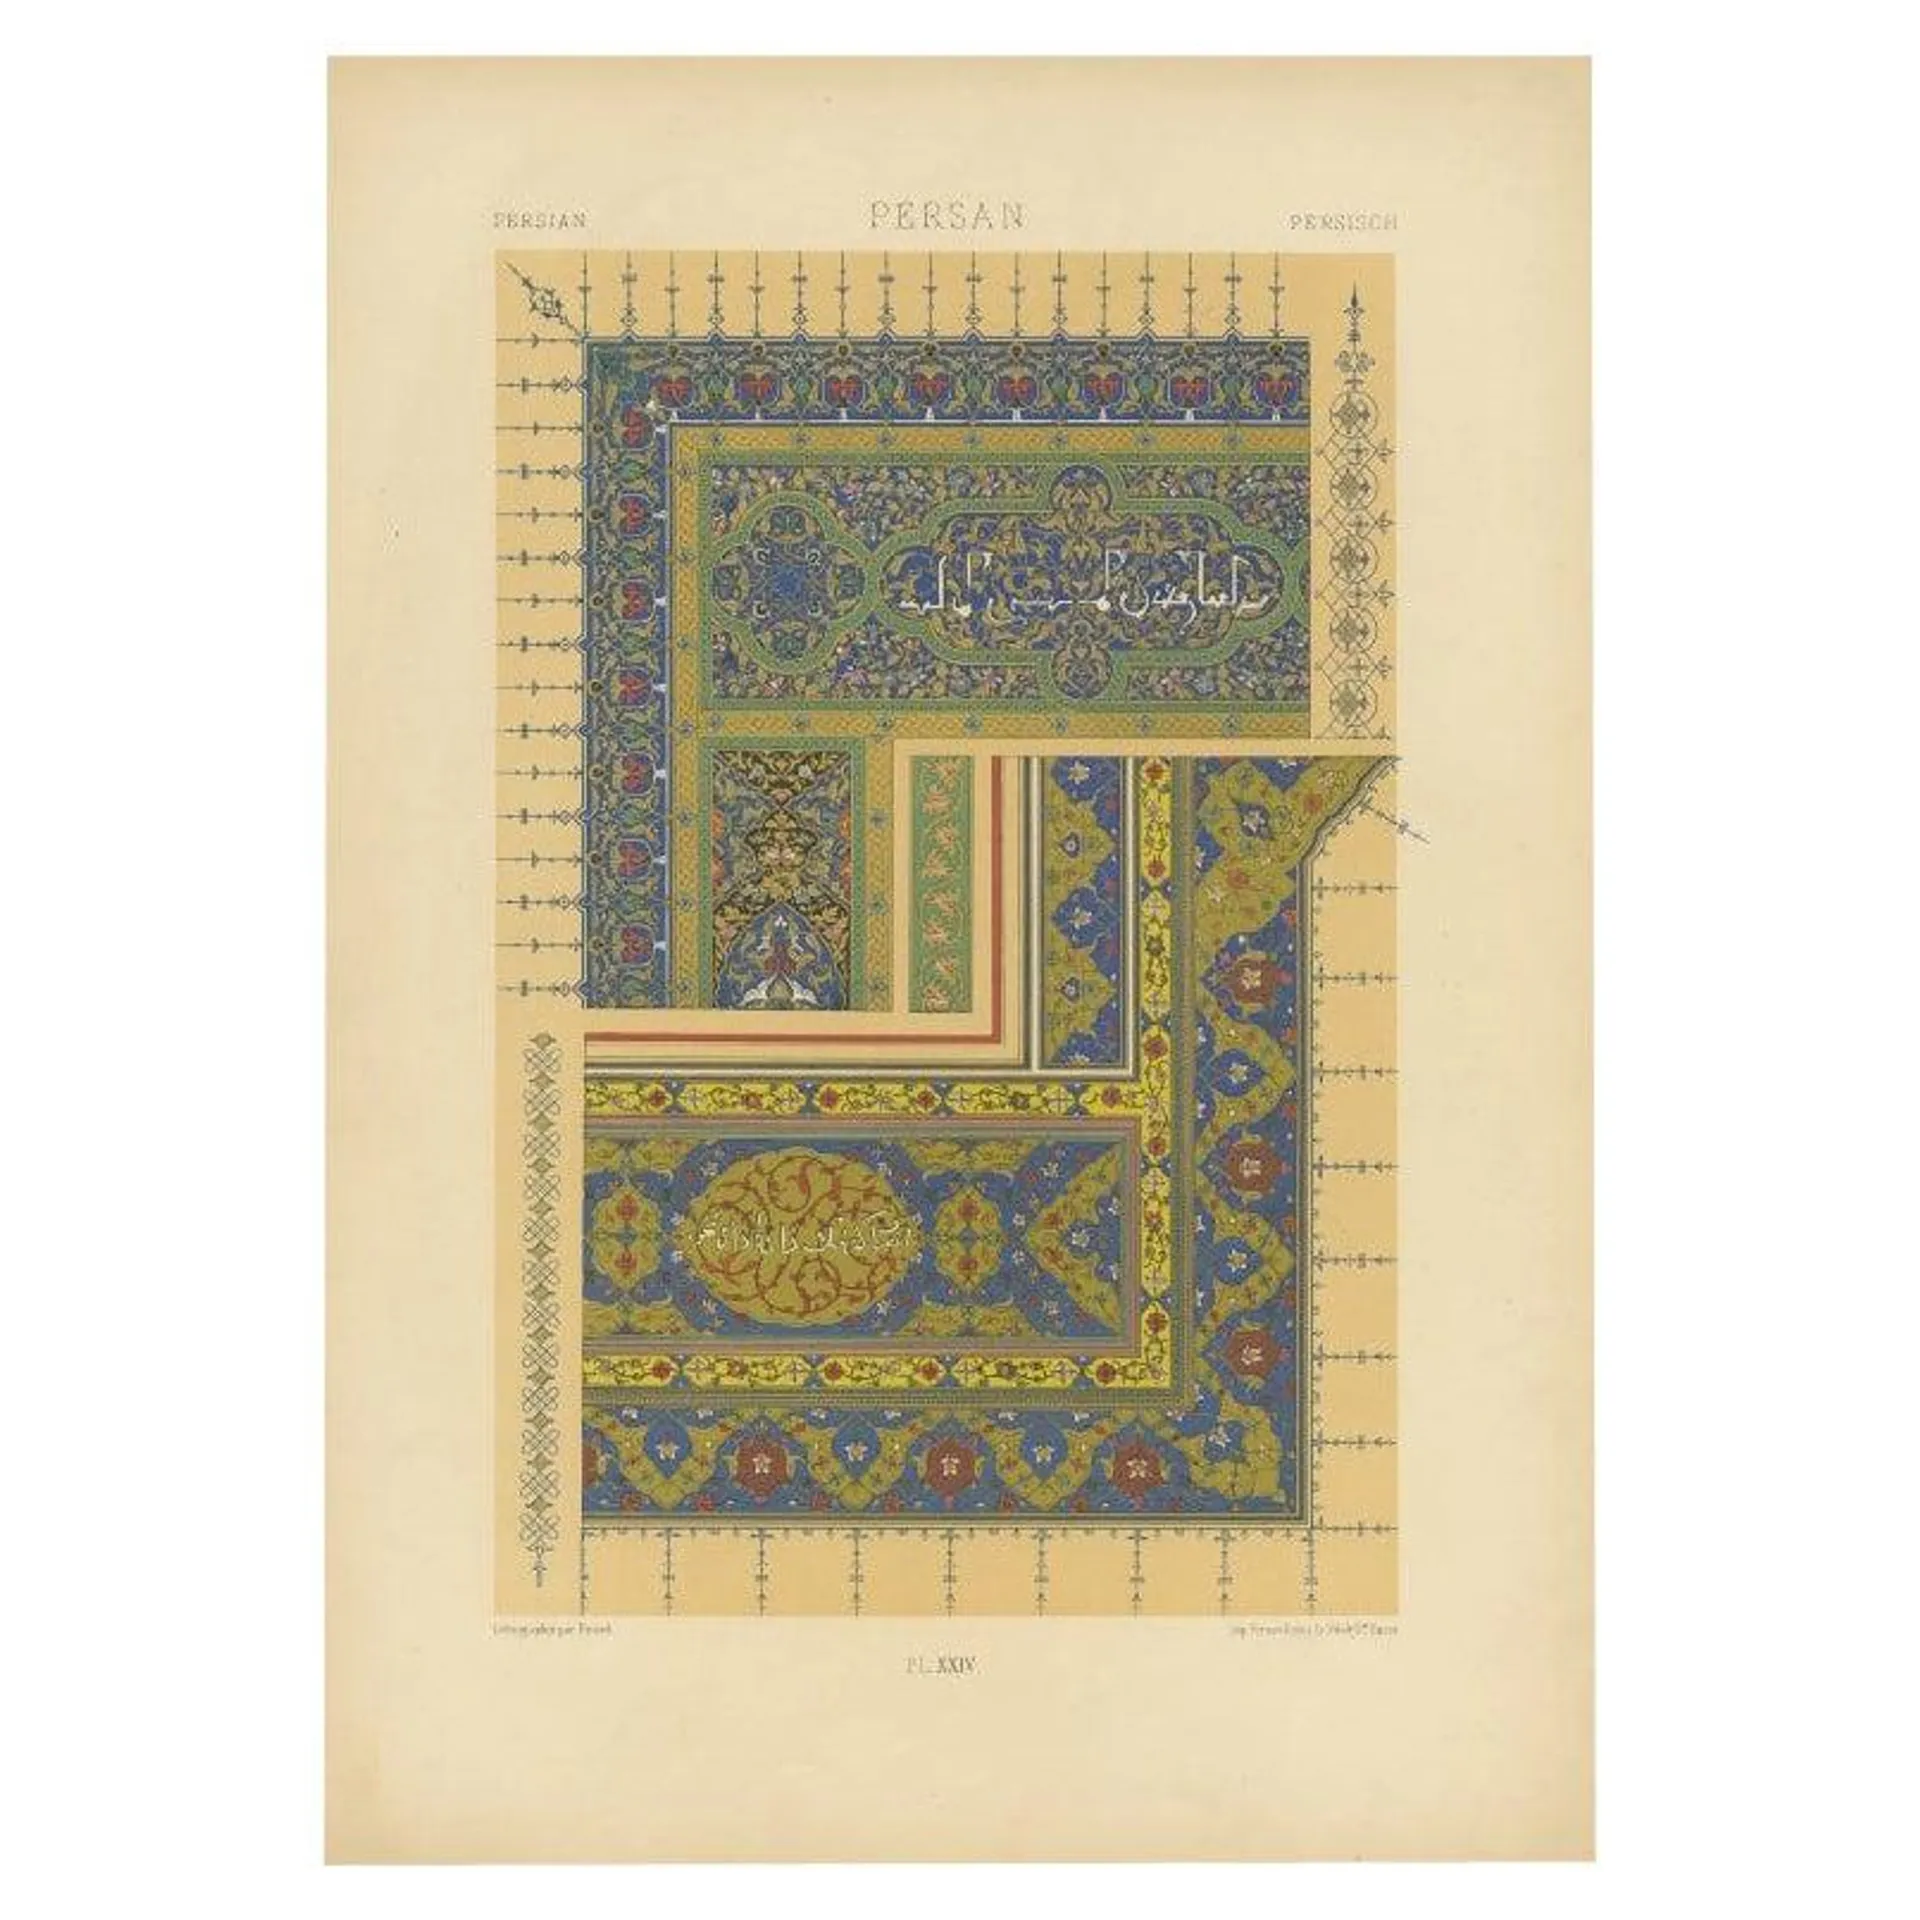 Antique Print of Persian Decorative Art by Racinet, 1869